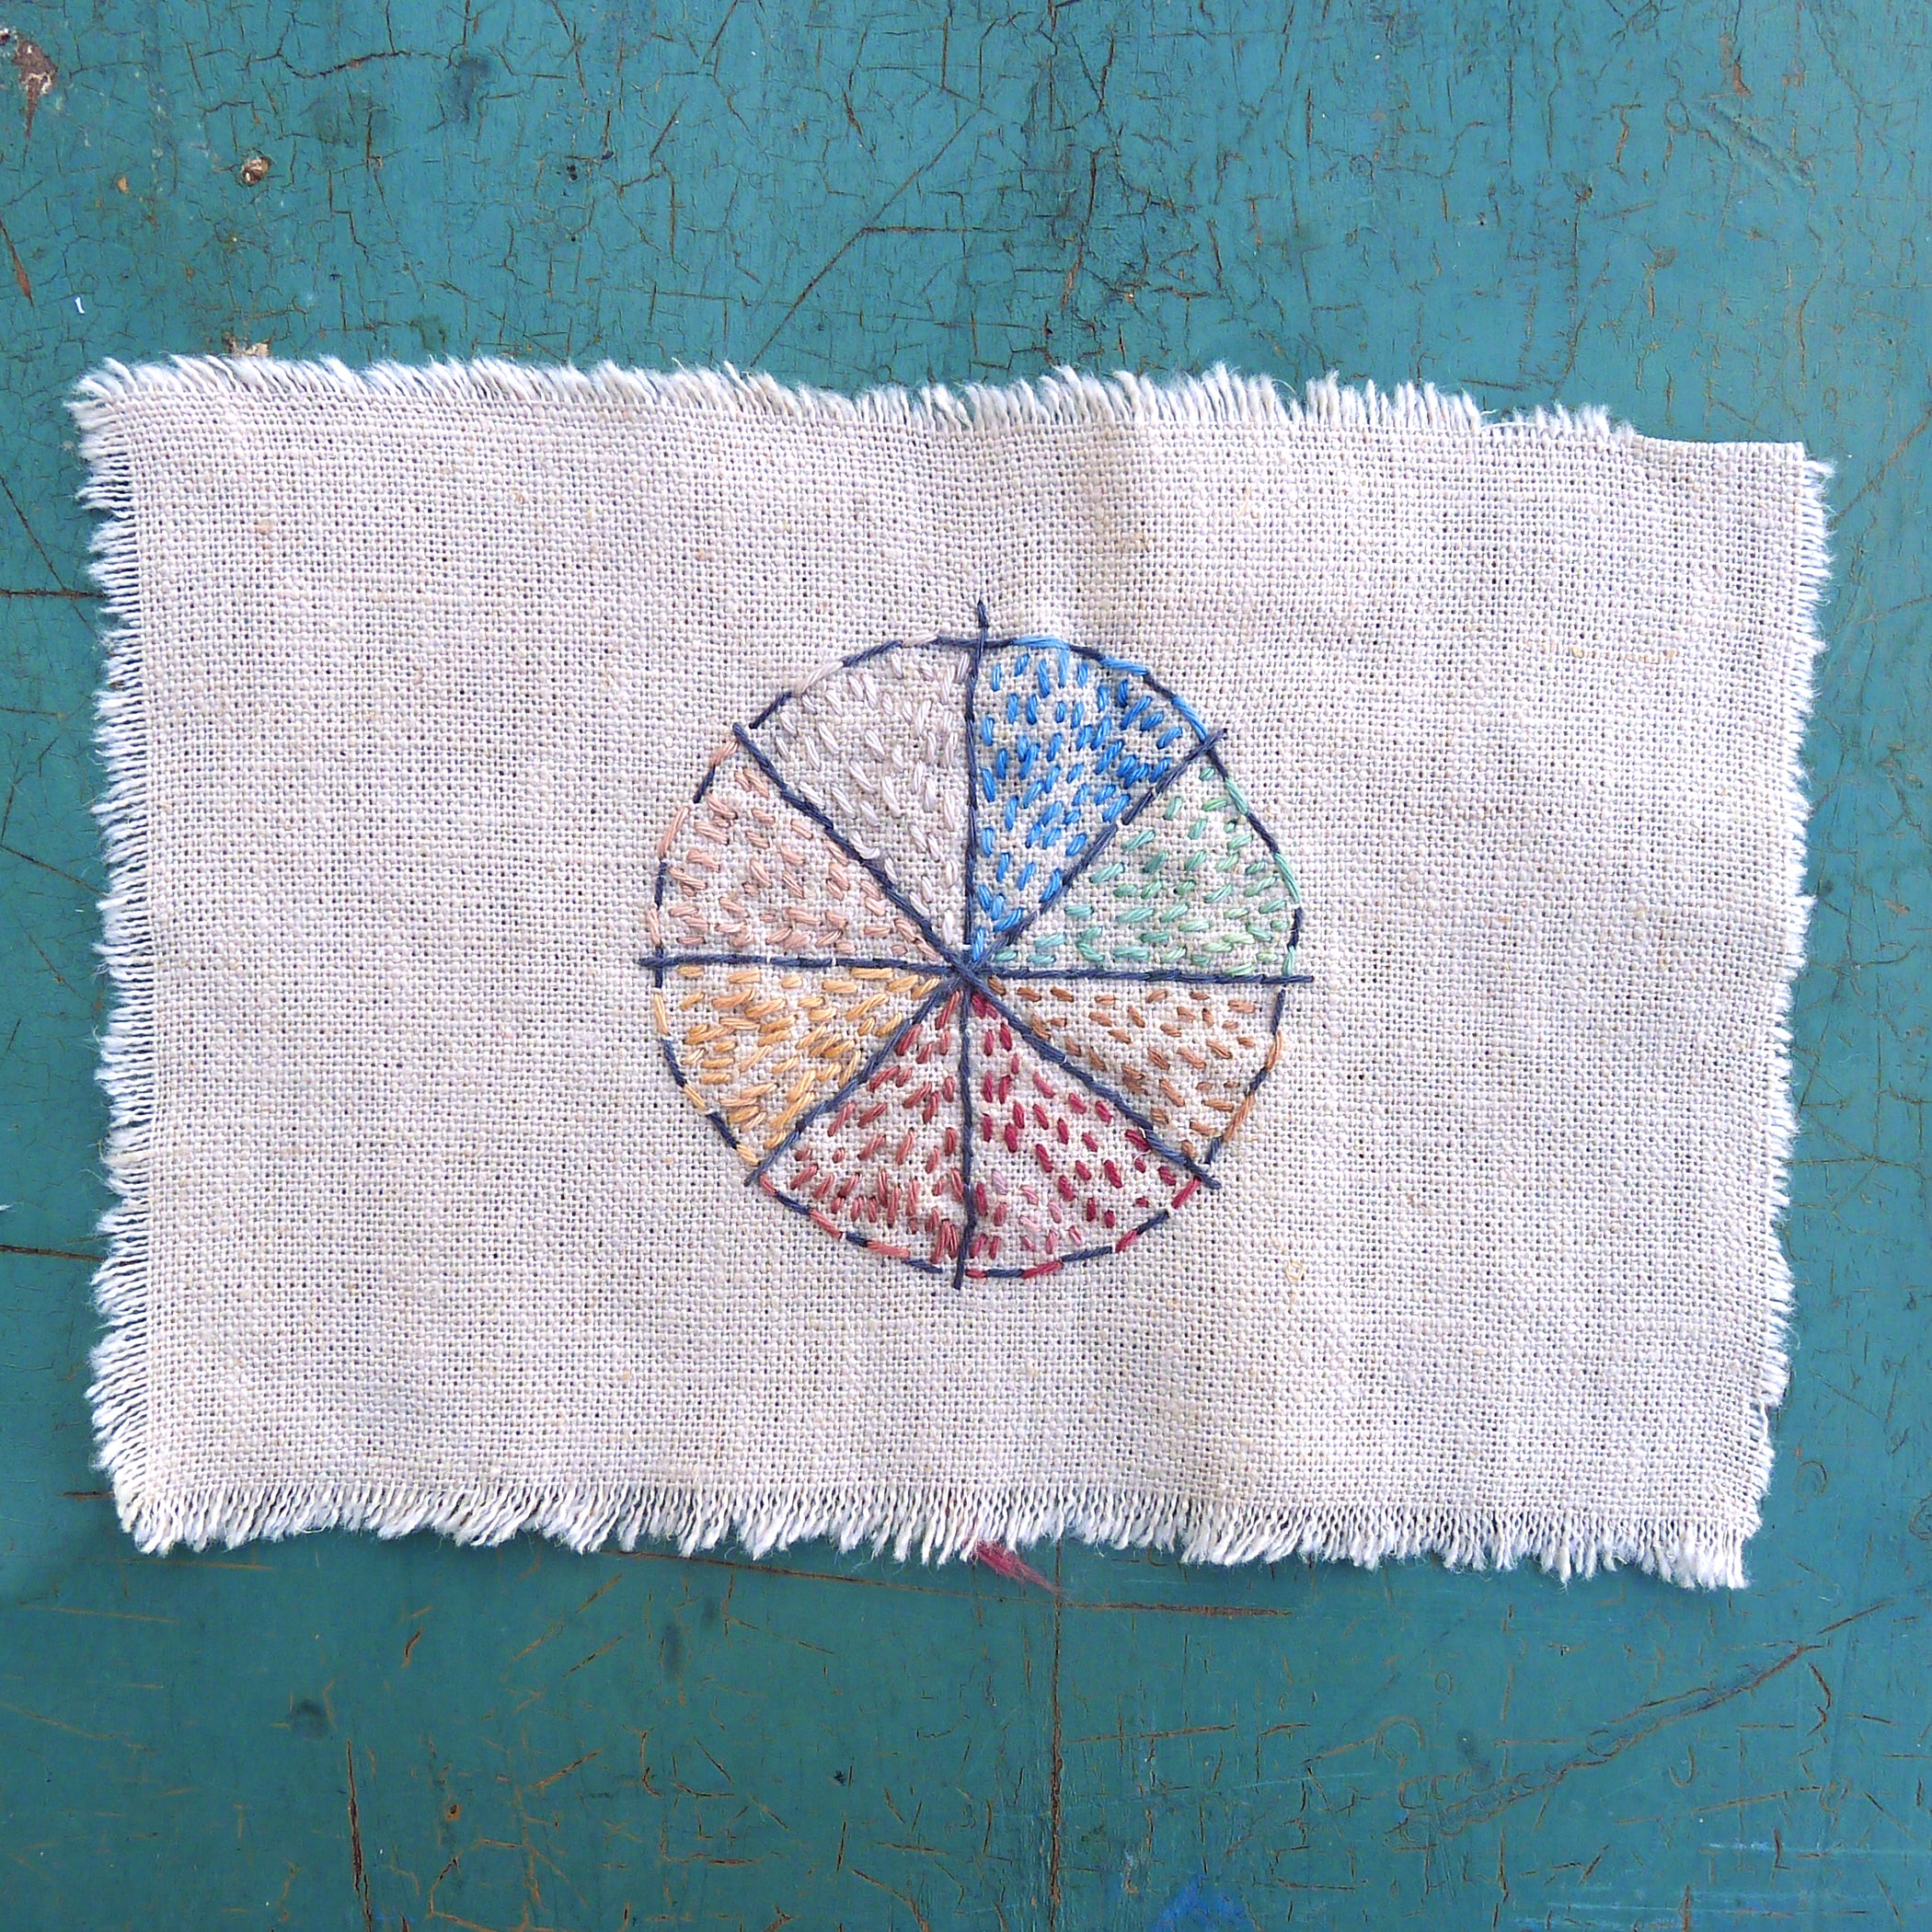 Variegated Sashiko Thread-Assorted Colors - Wise Craft Handmade